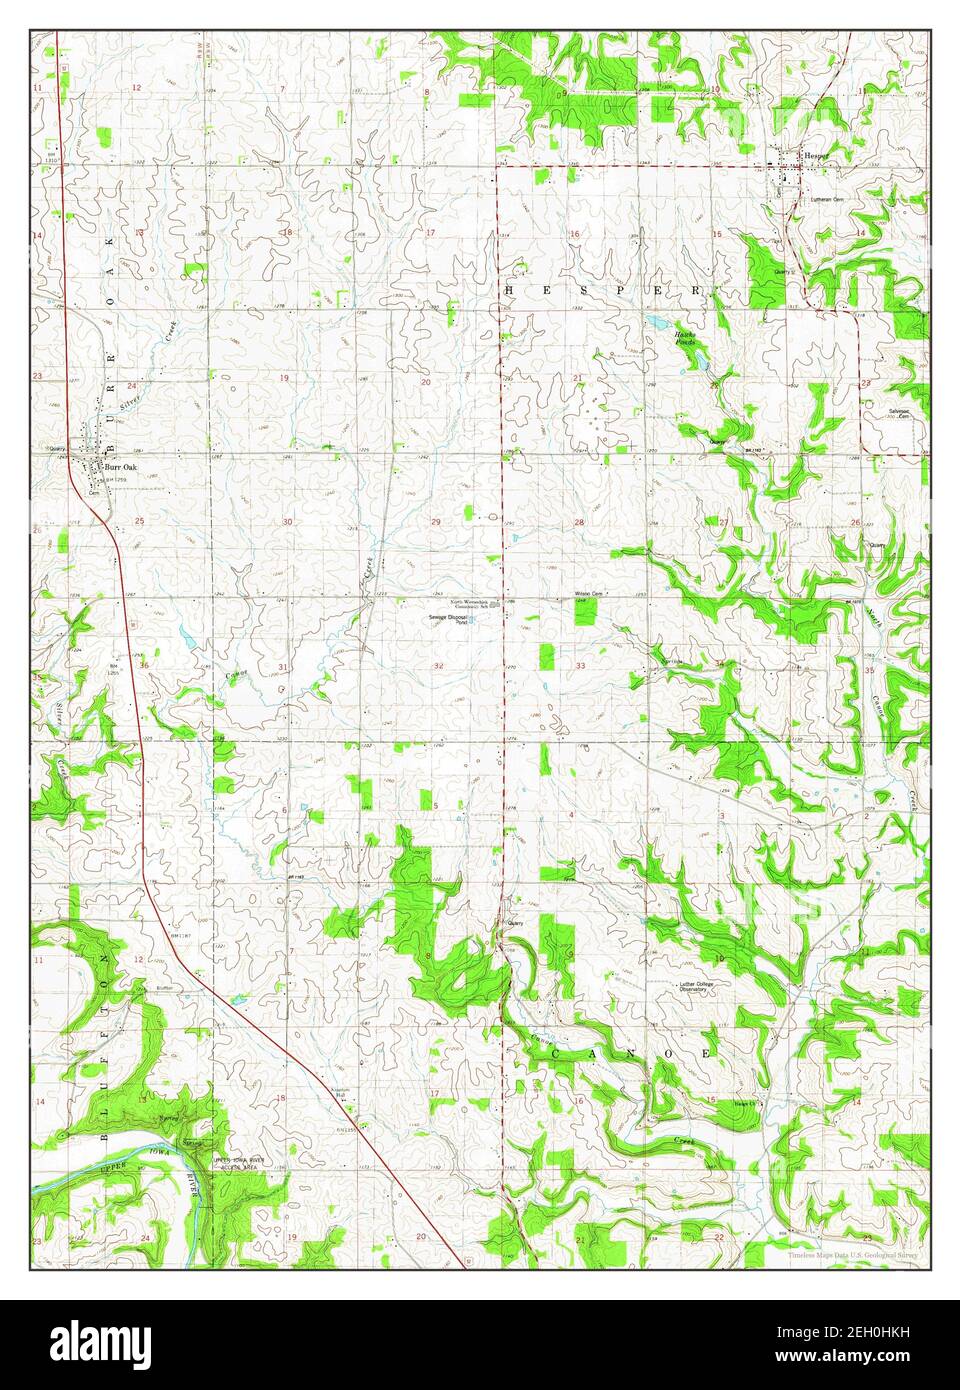 Burr Oak, Iowa, map 1981, 1:24000, United States of America by Timeless Maps, data U.S. Geological Survey Stock Photo